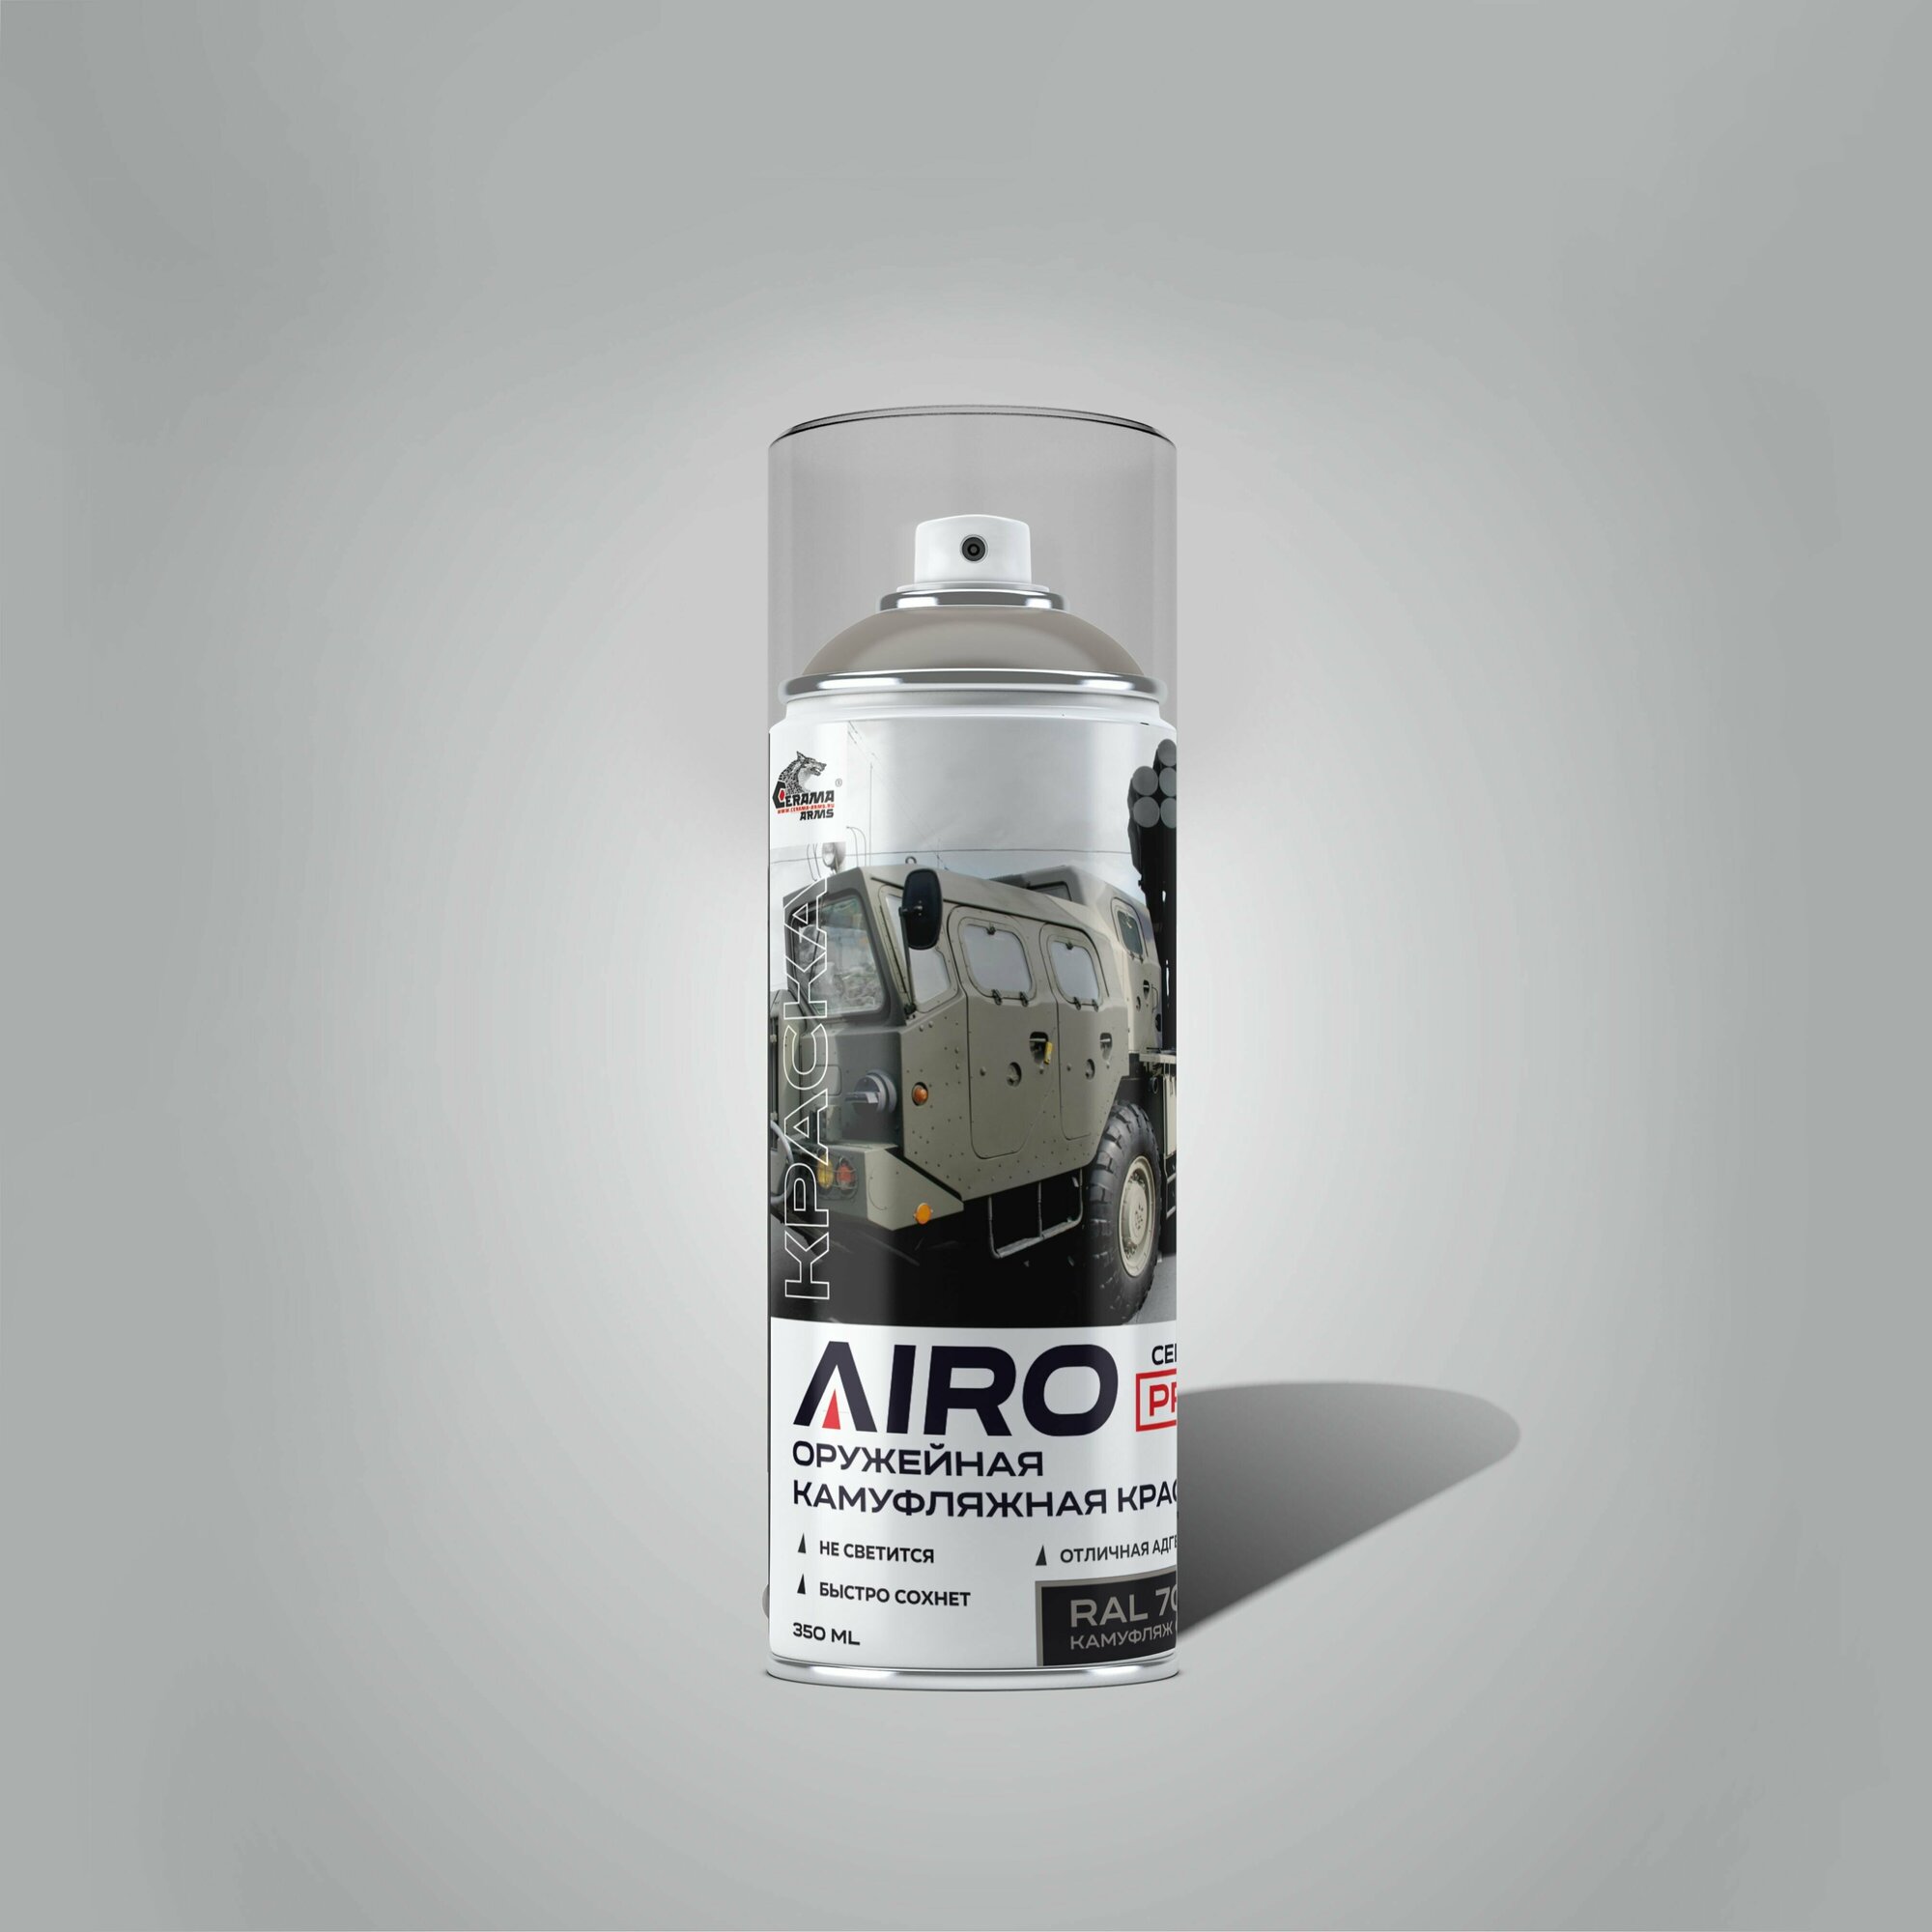 AIRO - PRO 7050 камуфляж серый CERAMA-ARMS Оружейная аэрозольная камуфляжная краска обьем 350/250 Ral F9 7050 цвет: CAMOUFLAGE GREY